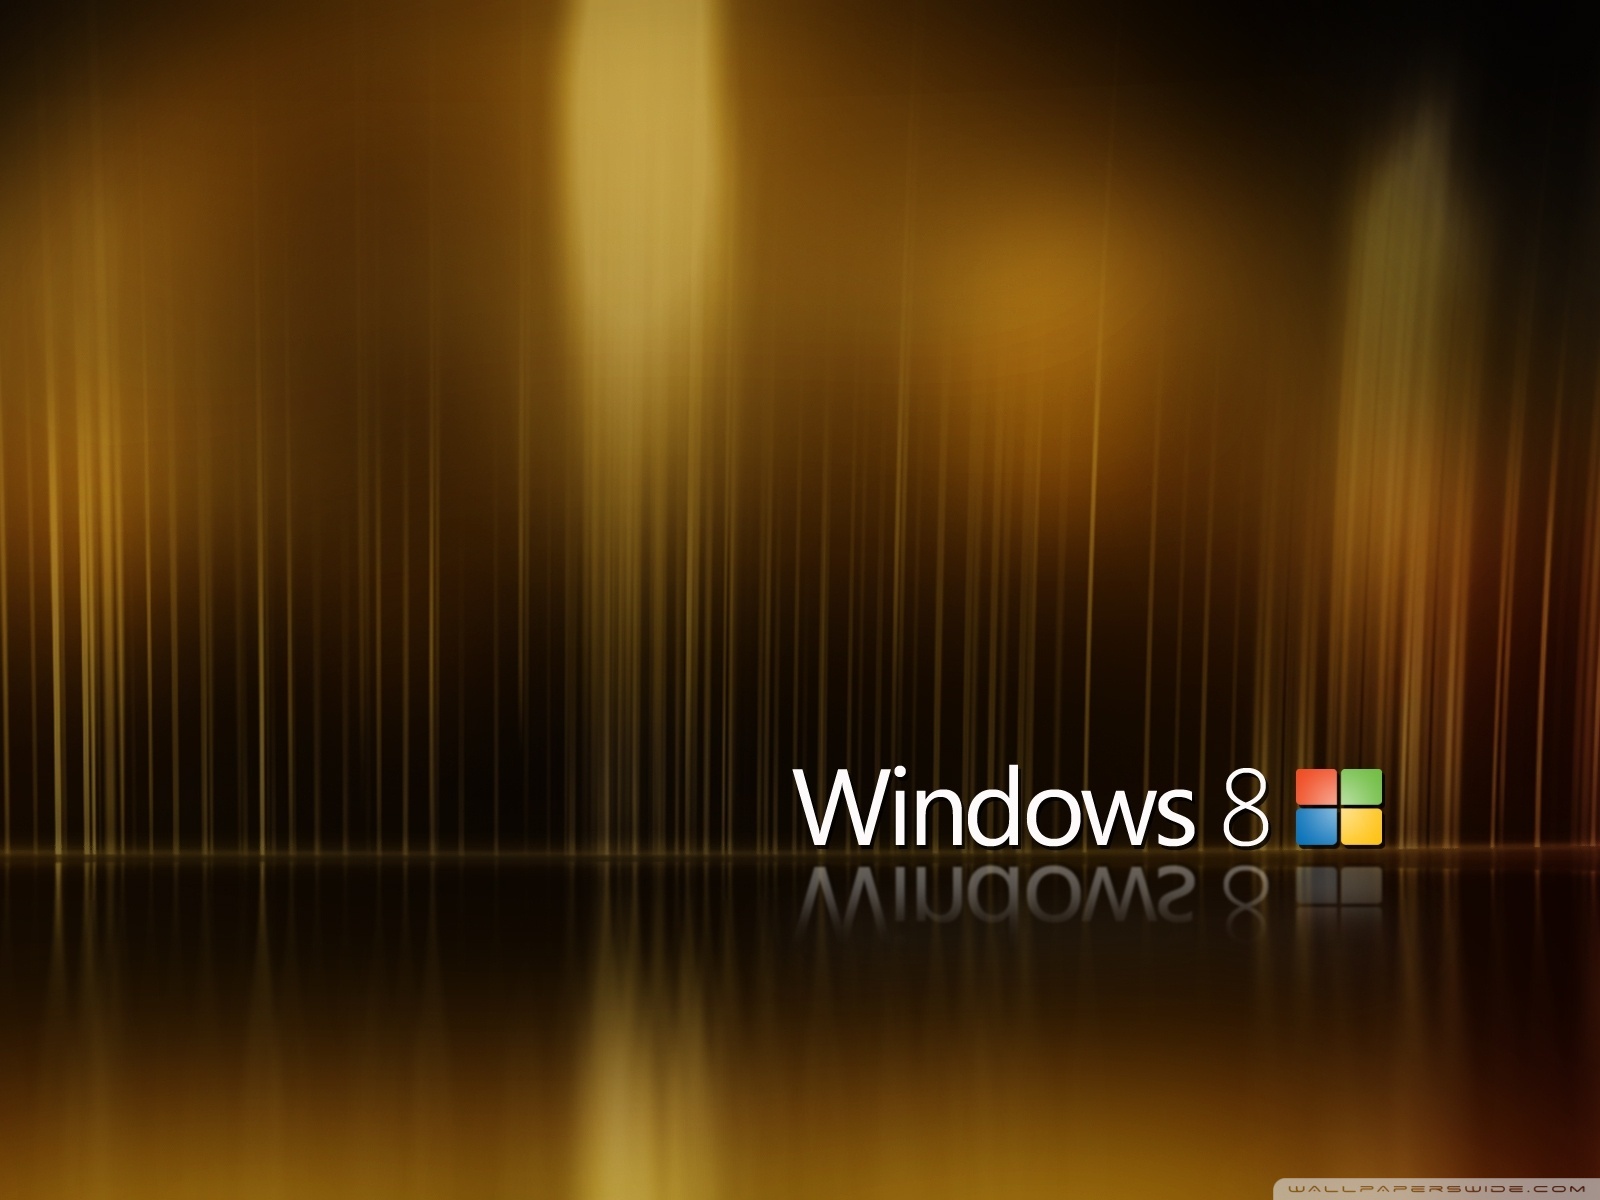 Windows 8 Ultra Hd Desktop Background Wallpaper For 4k Uhd Tv Tablet Smartphone